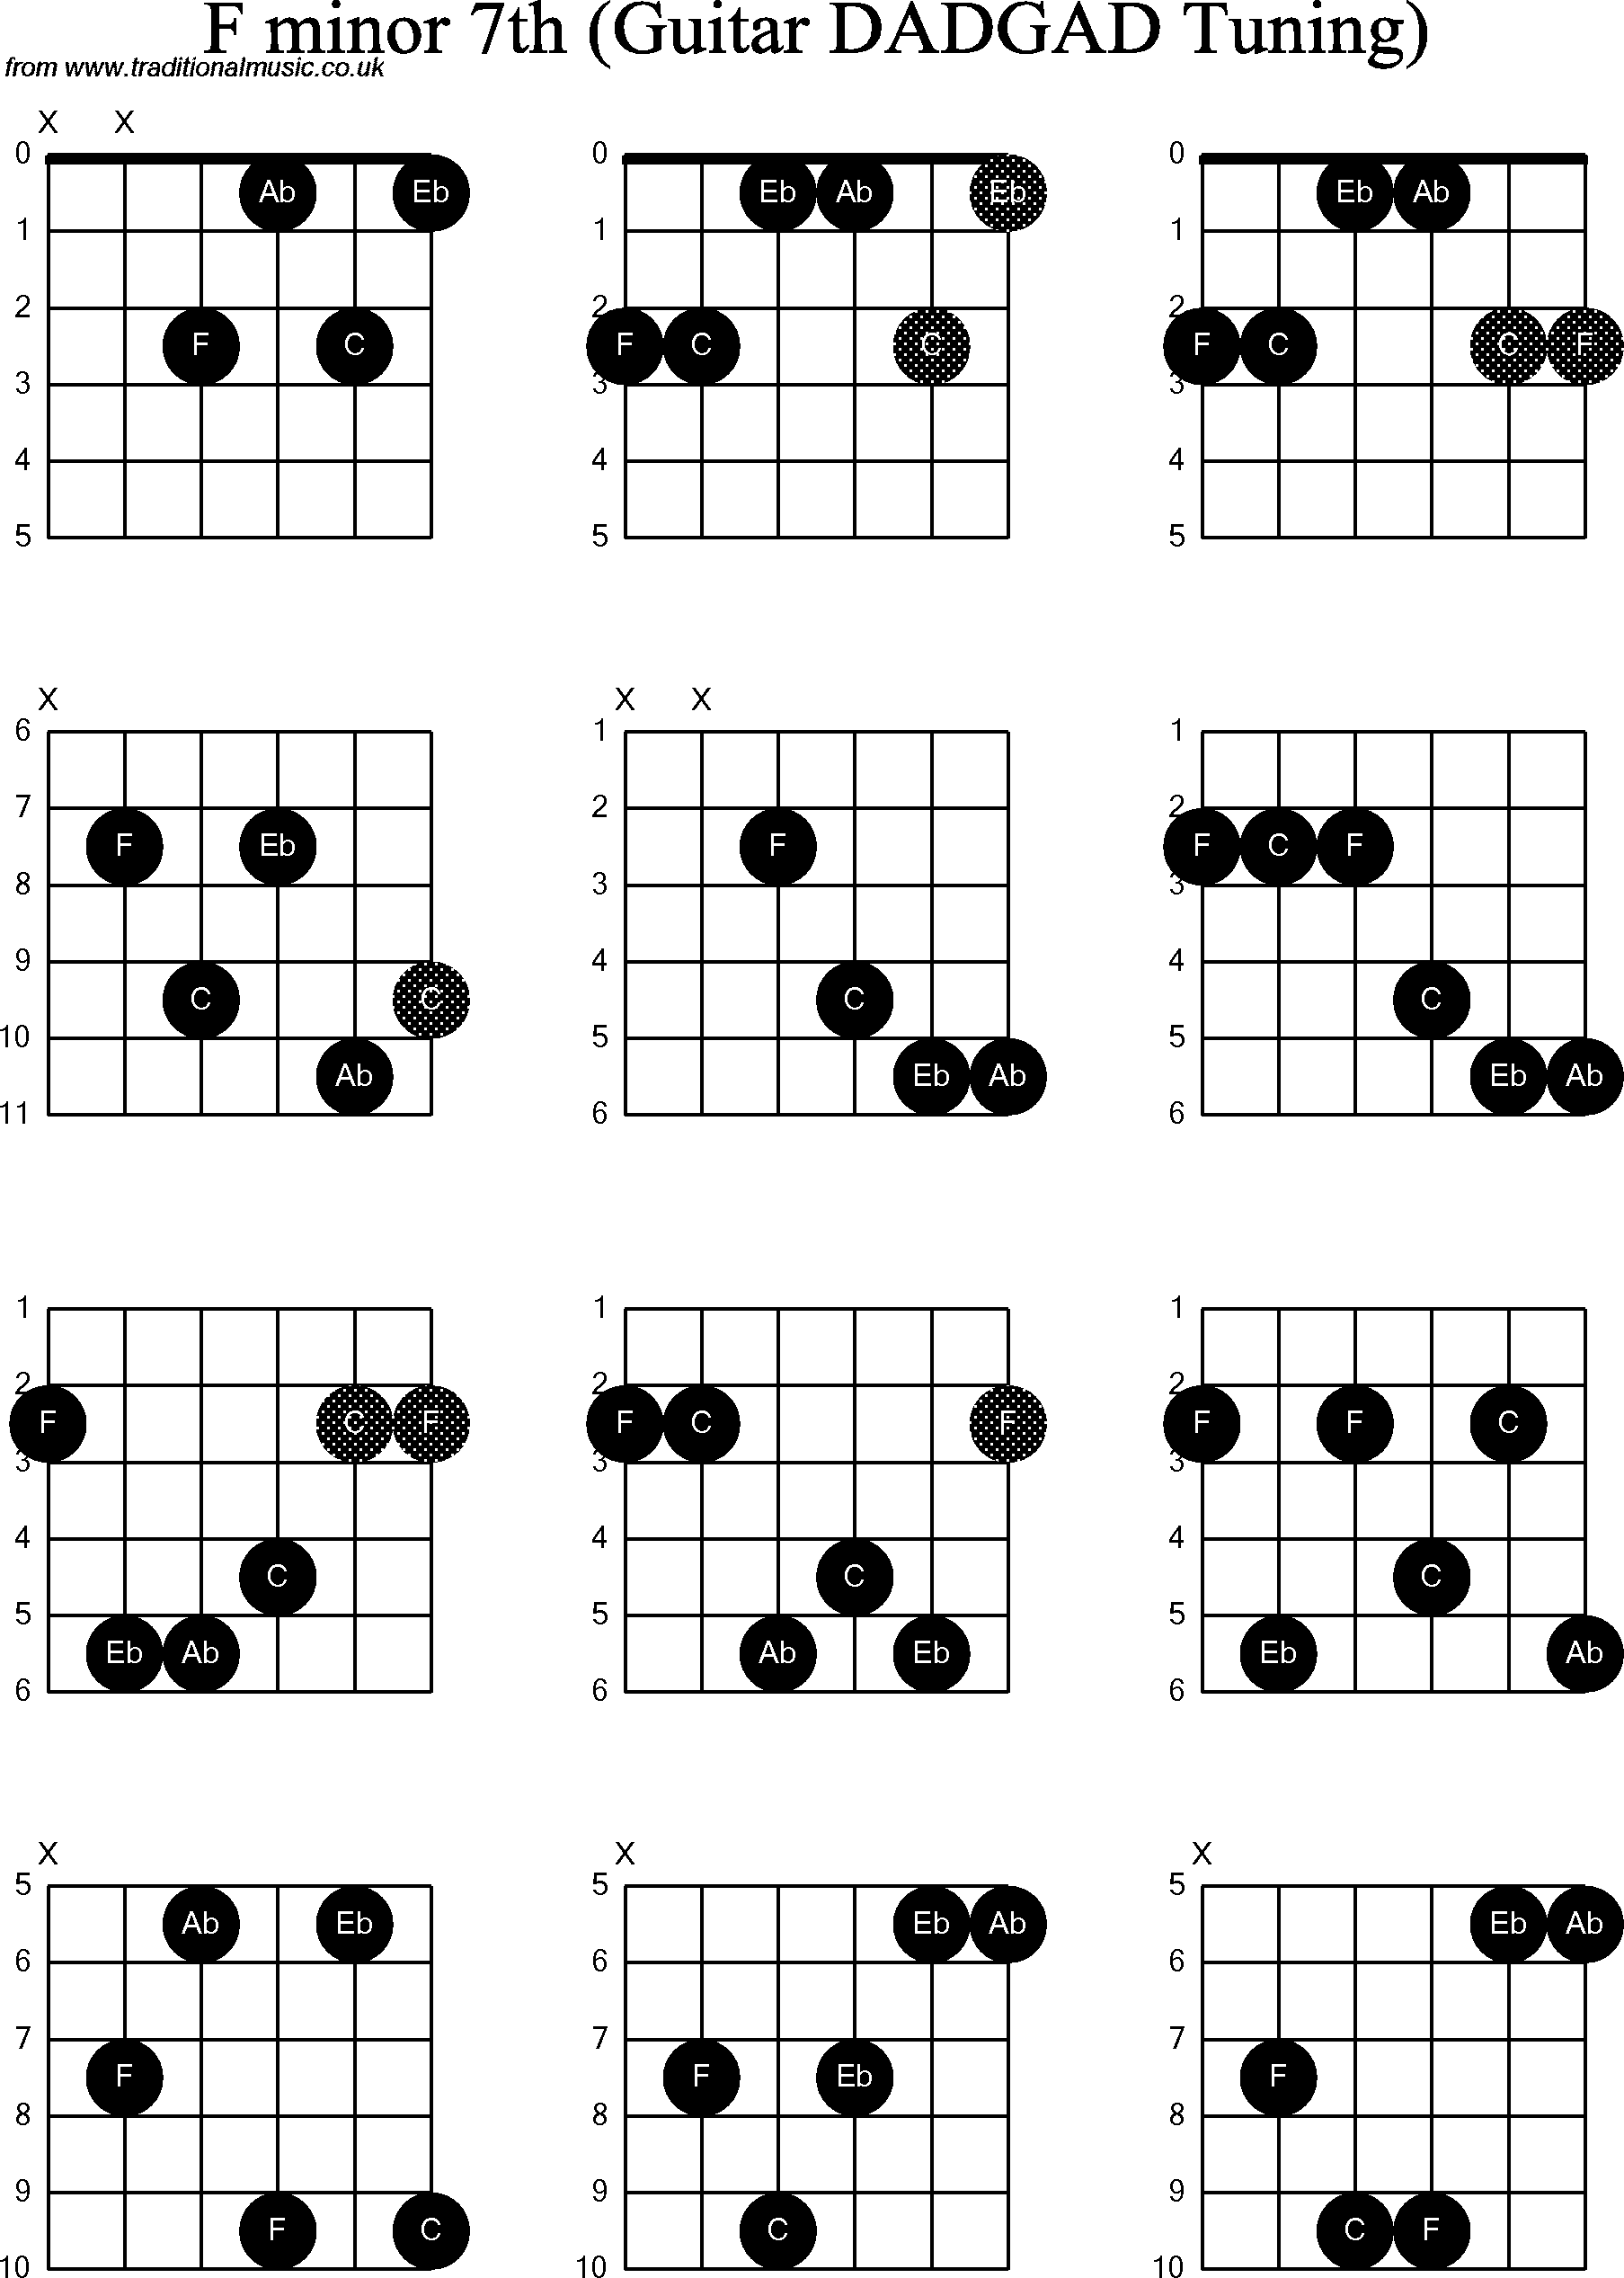 Chord Diagrams for D Modal Guitar(DADGAD), F Minor7th